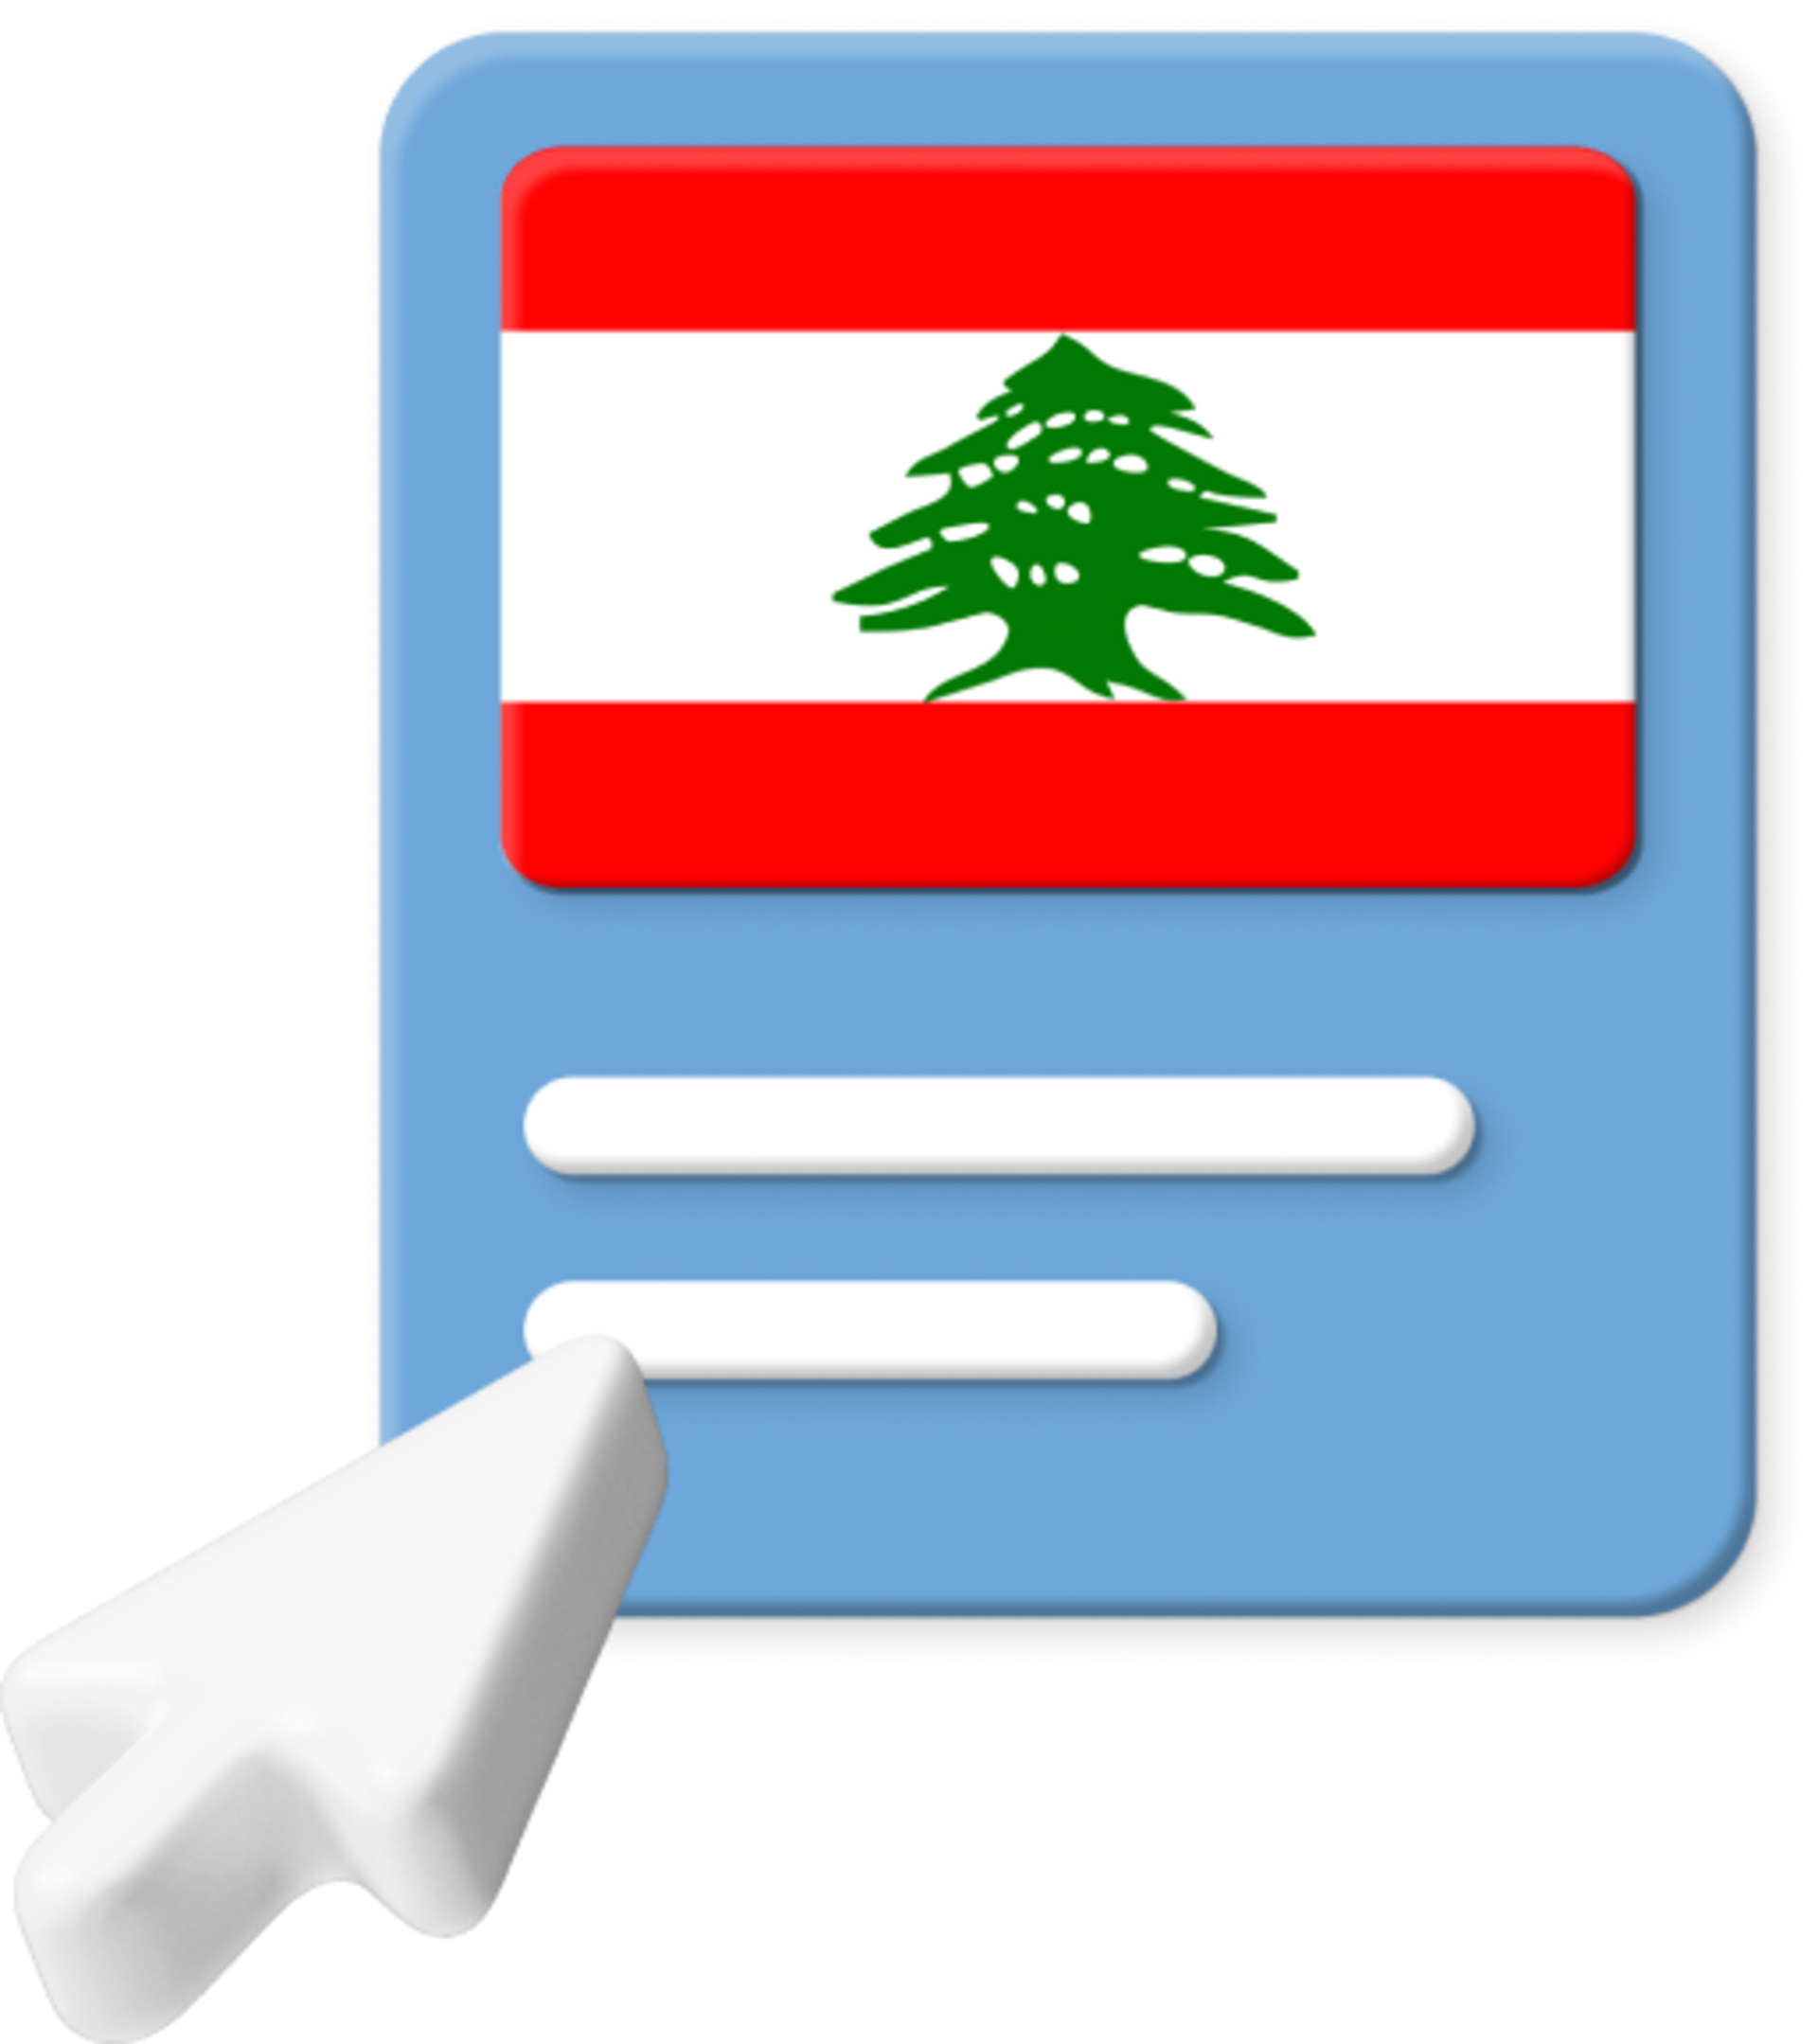 Lebanon flag with large cursor icon